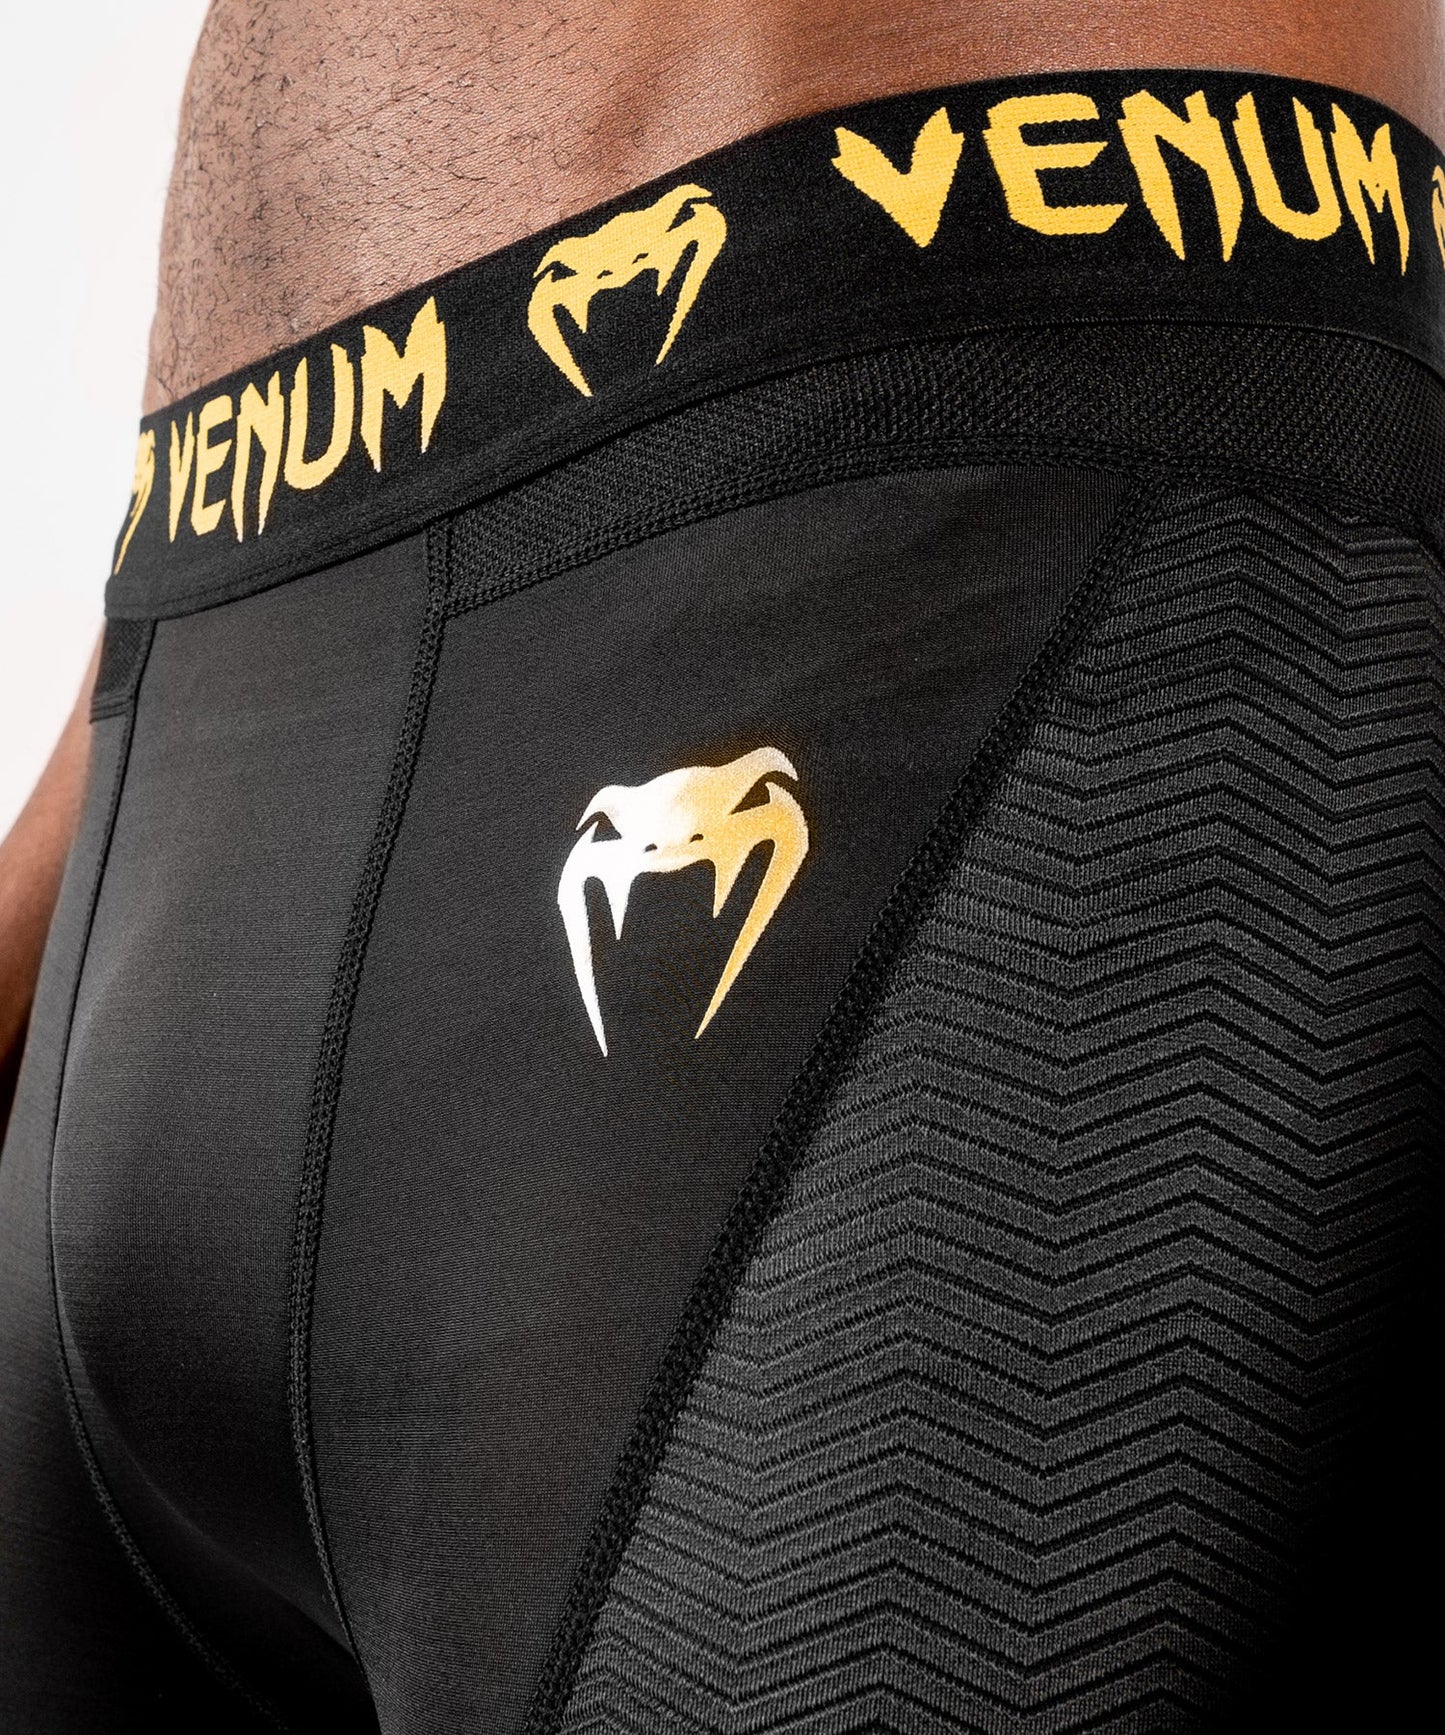 Venum G-Fit Compression Shorts - Black/Gold